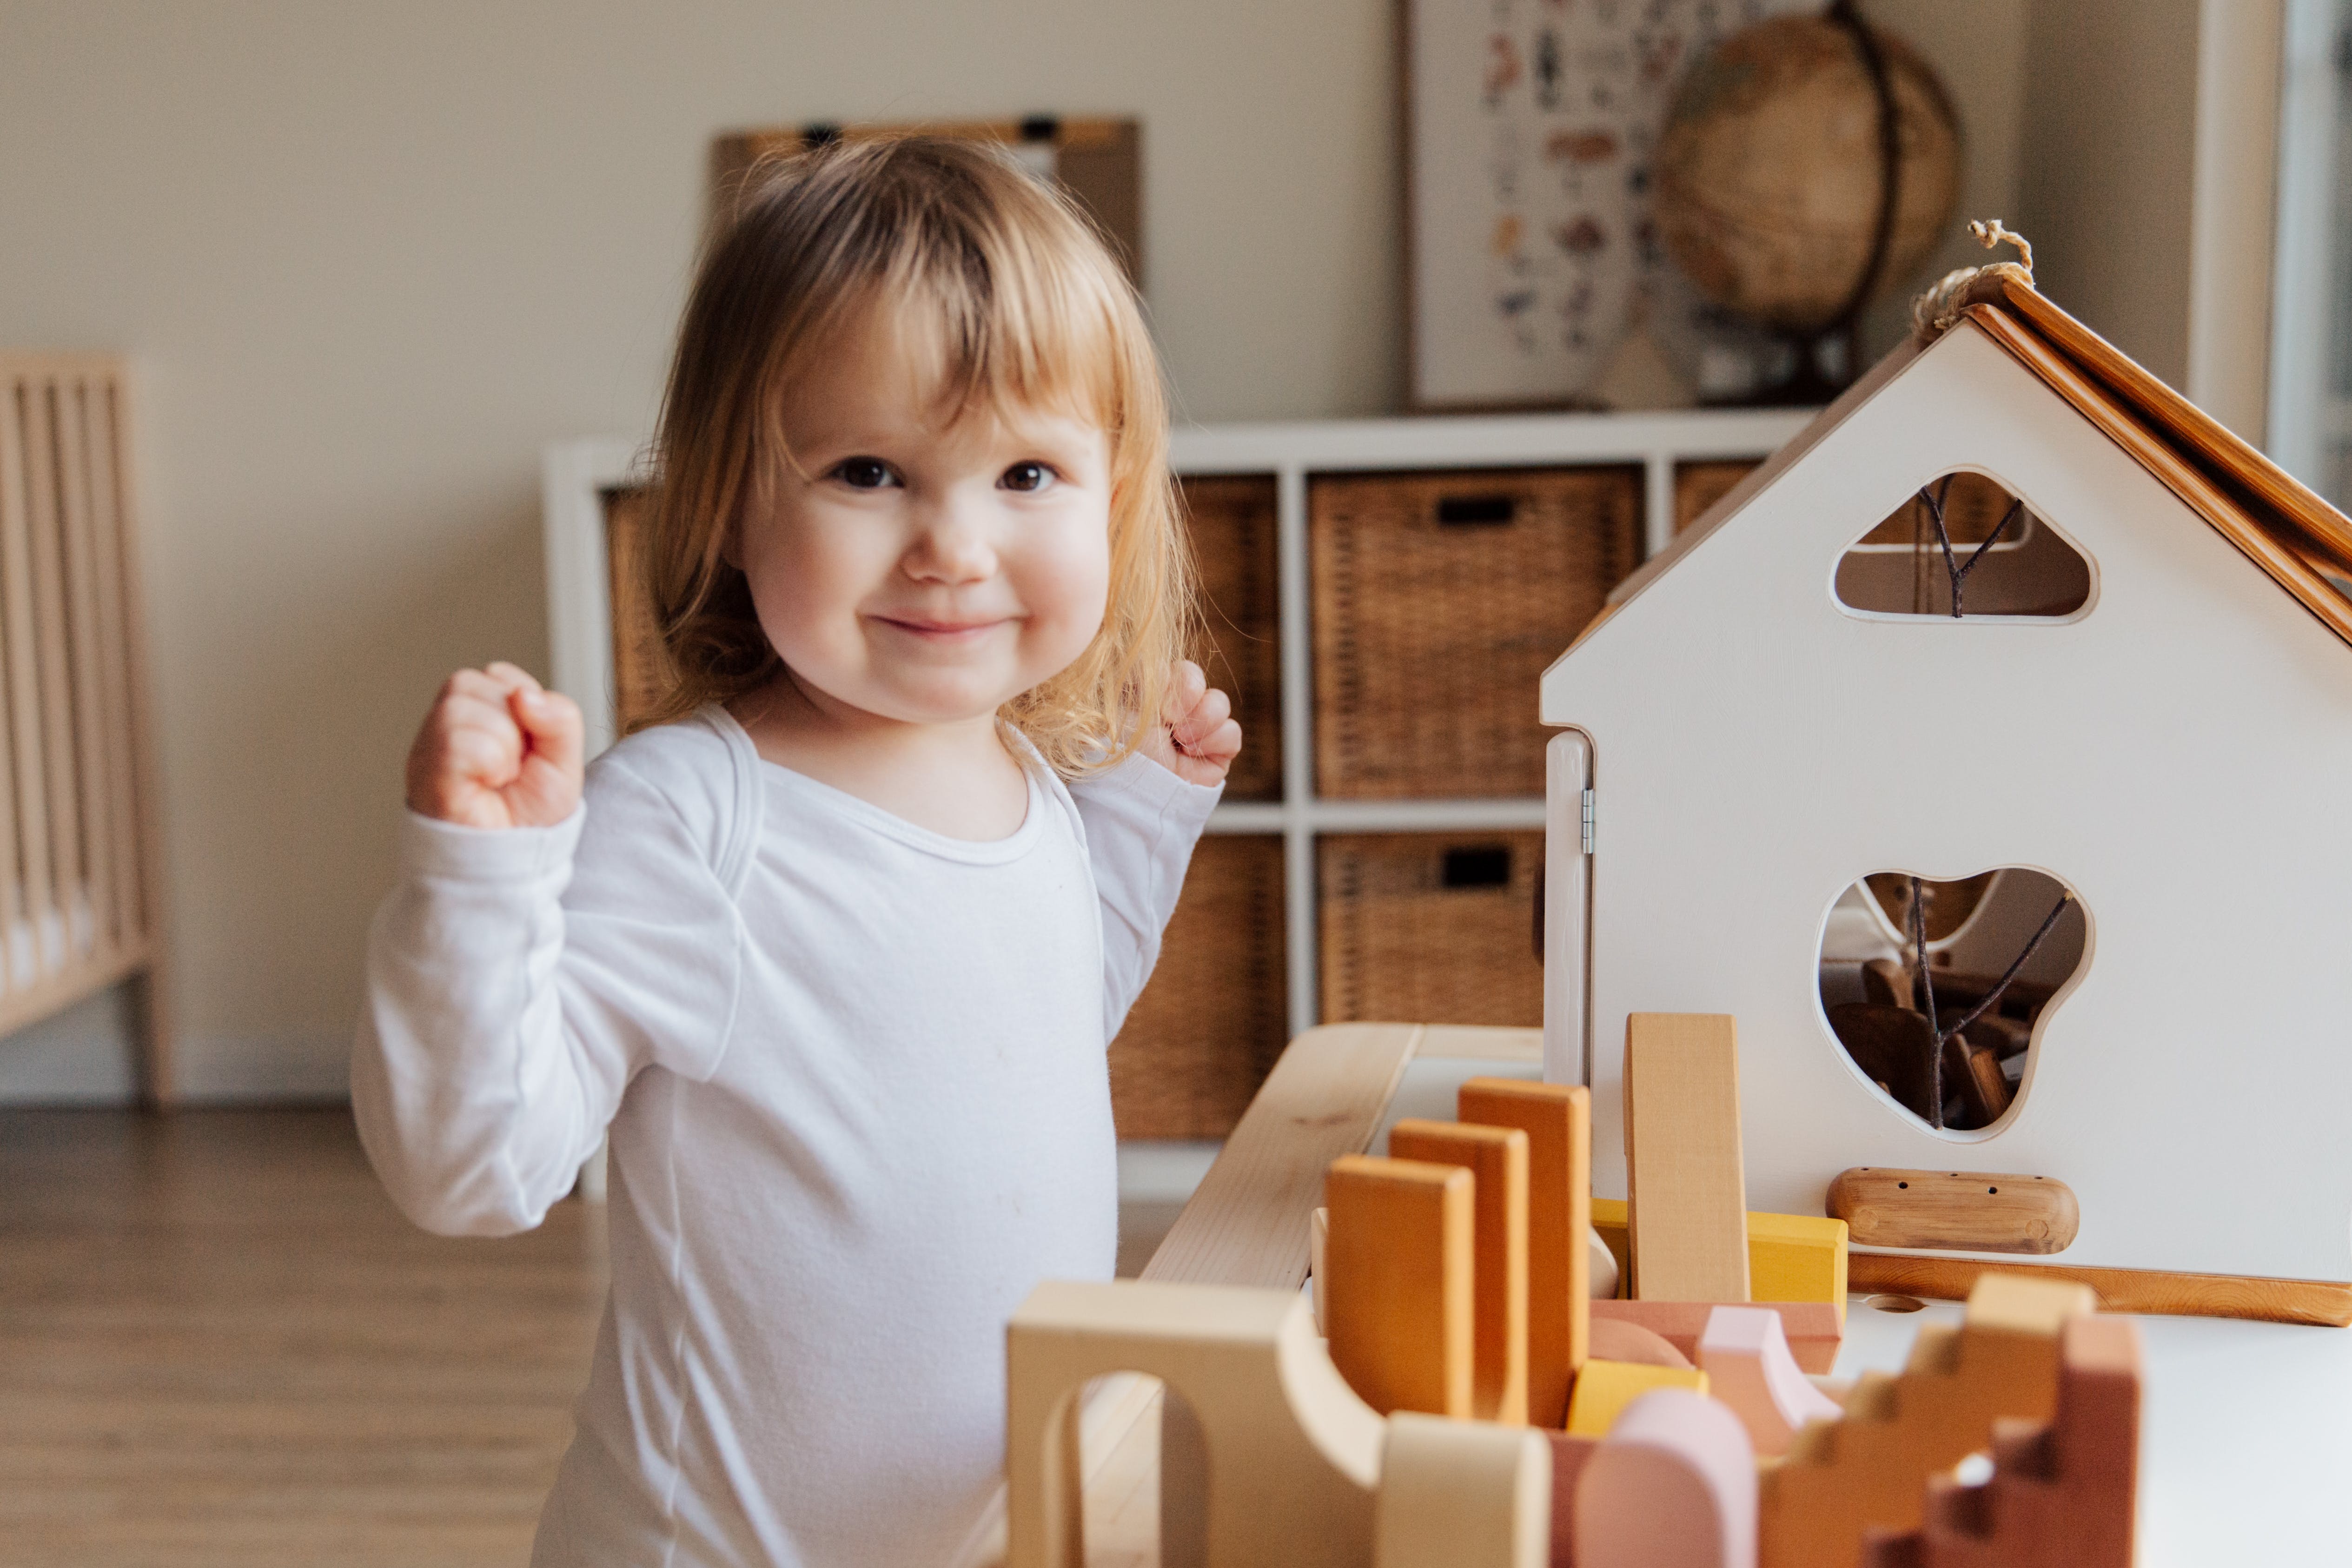 Girl toddler looking happy in nursery/bedroom